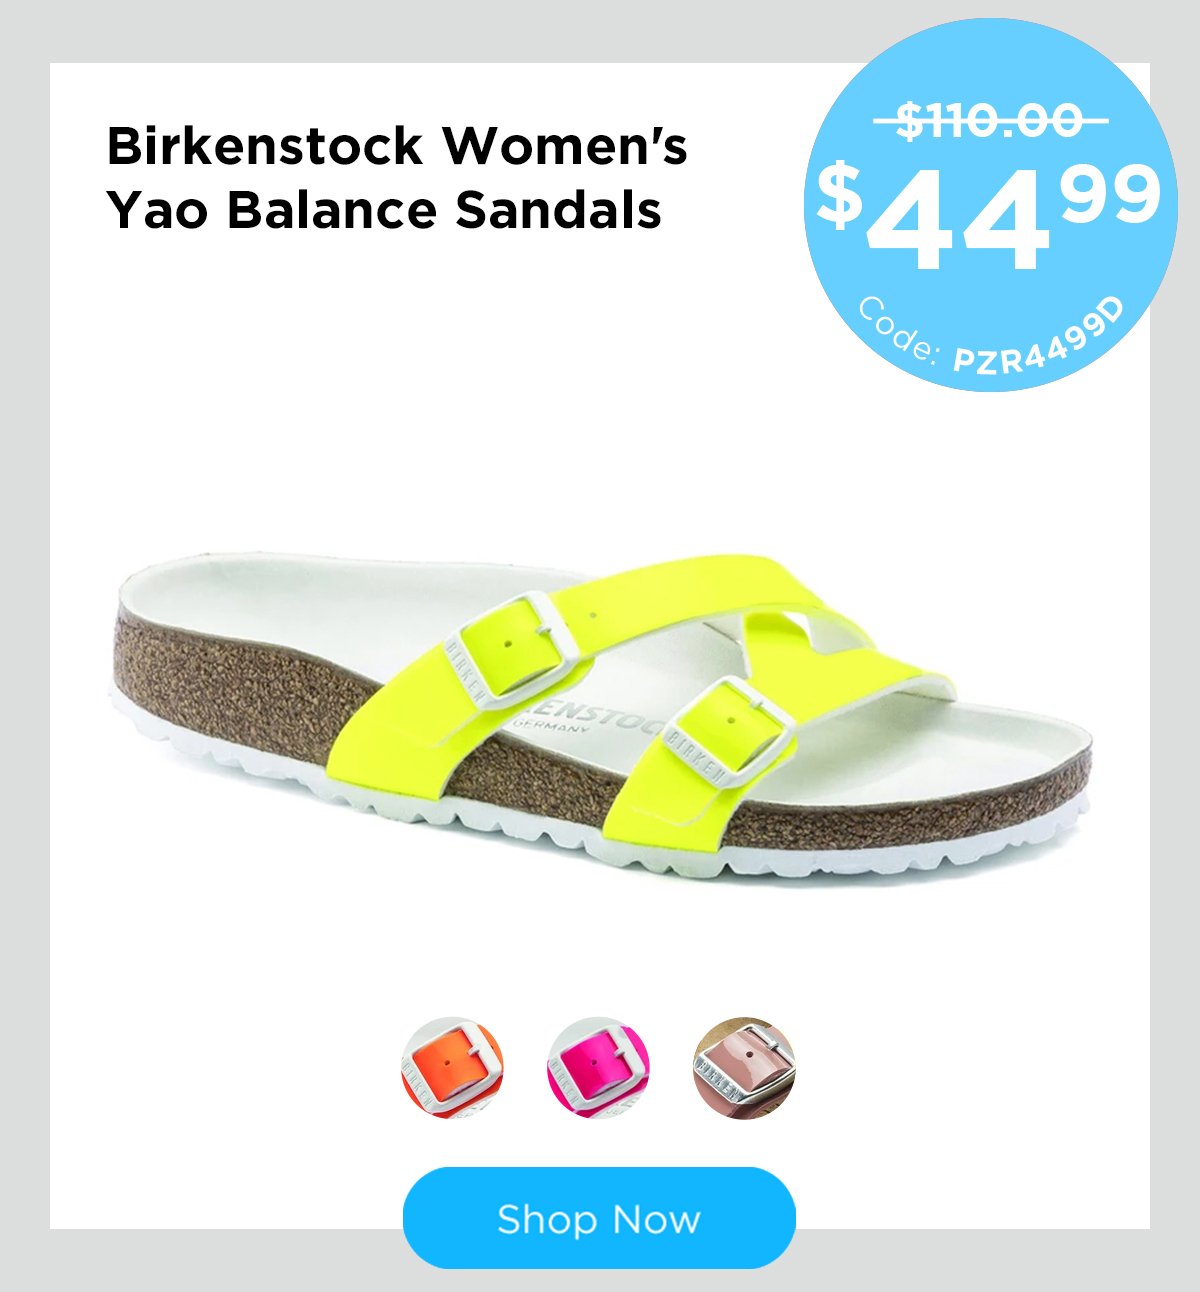 lowest price birkenstock sandals